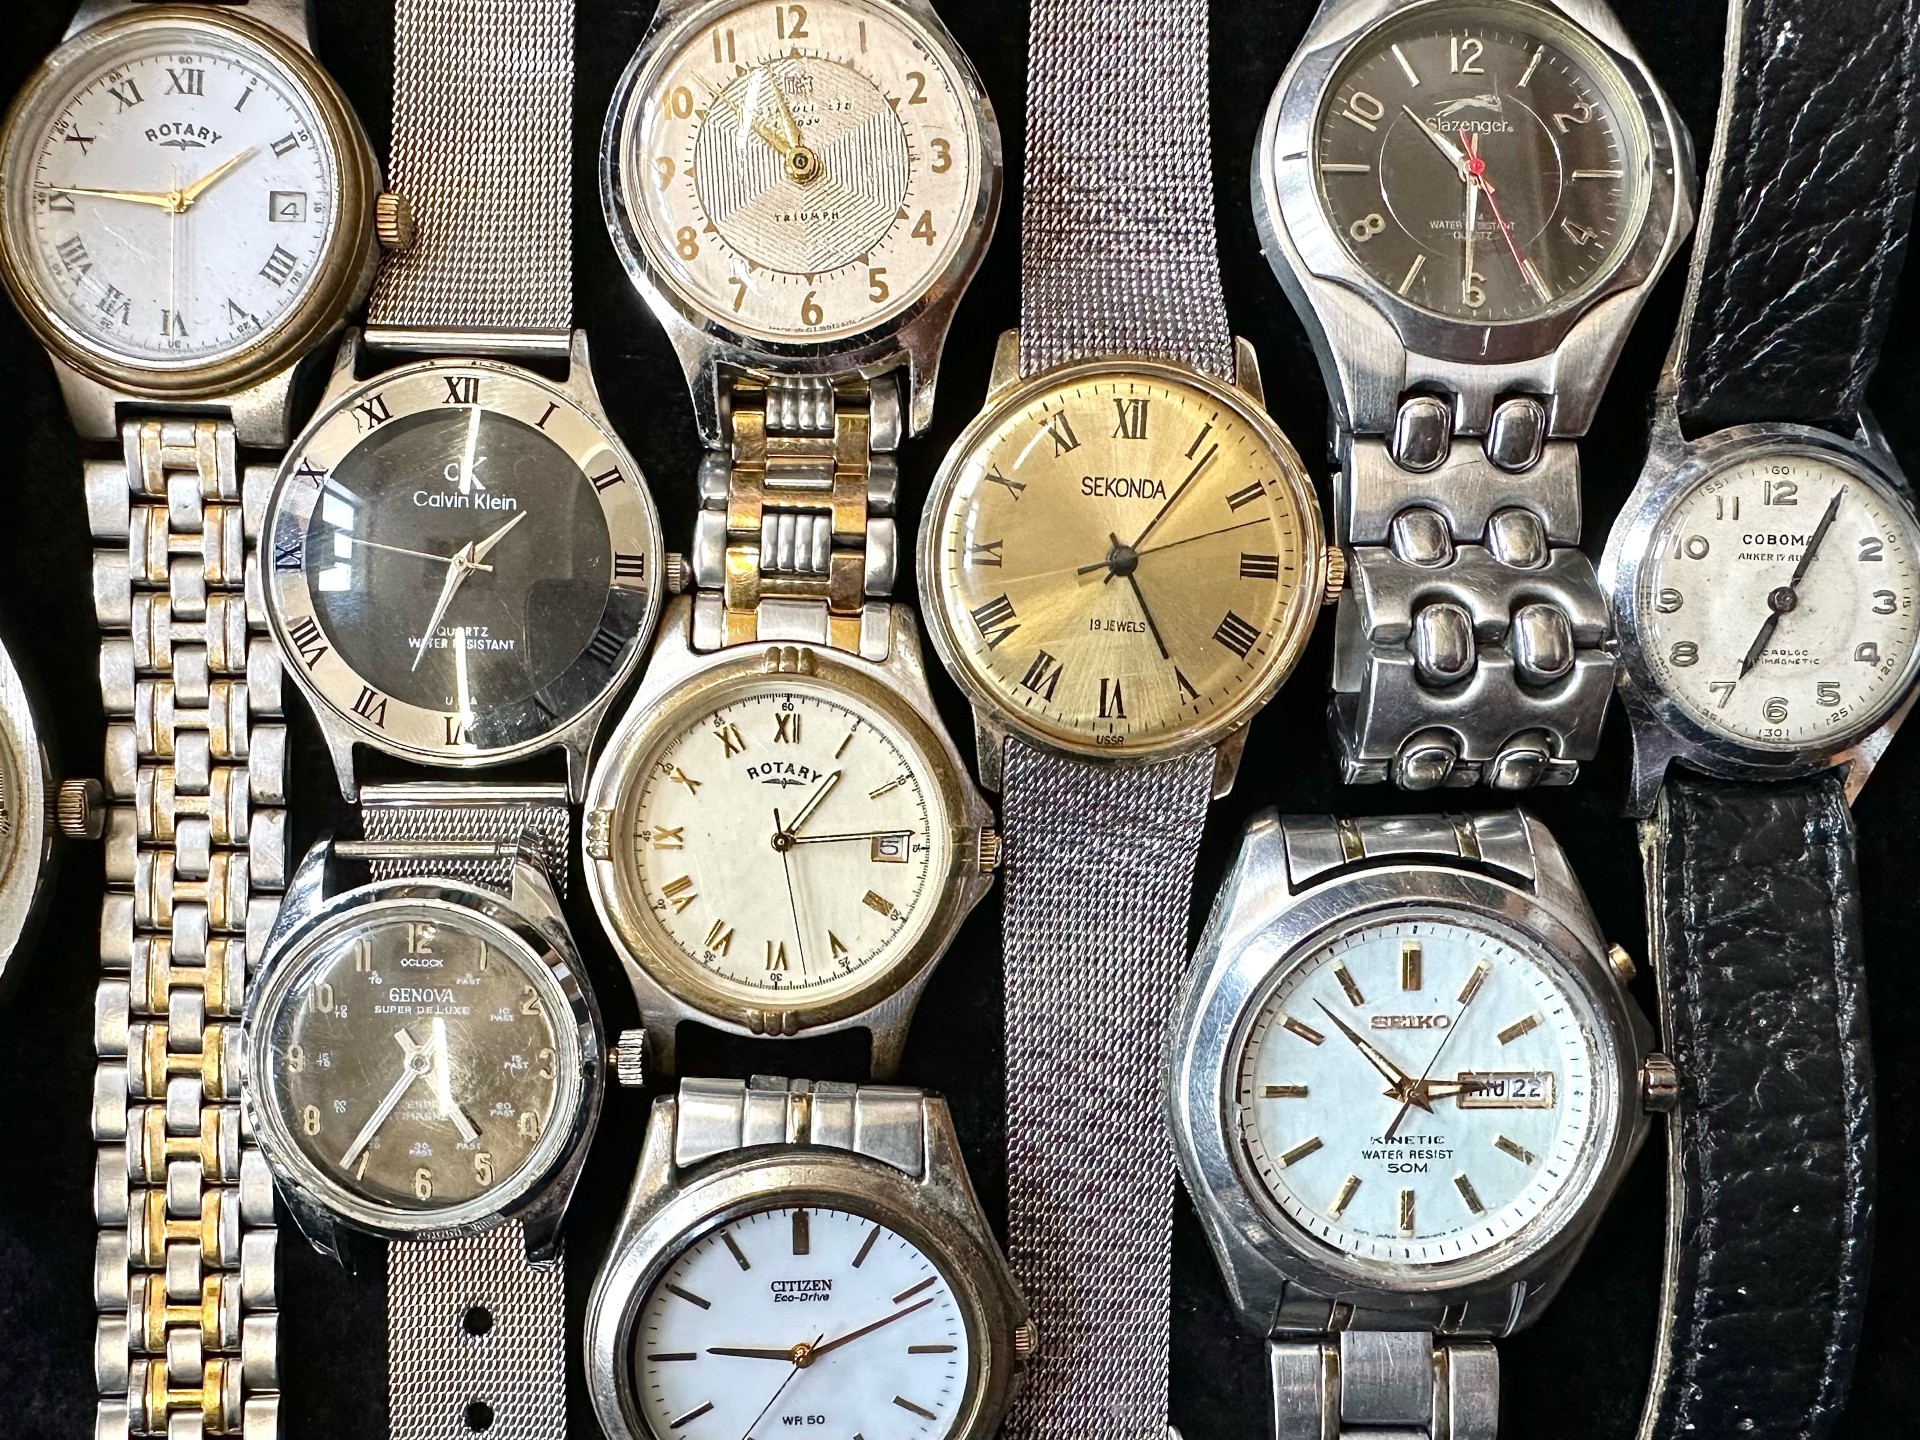 Collection of Gents Wristwatches. includes Seiko, Oris, Trafalgar, Genova, Coboma, Rotary etc. - Image 2 of 4